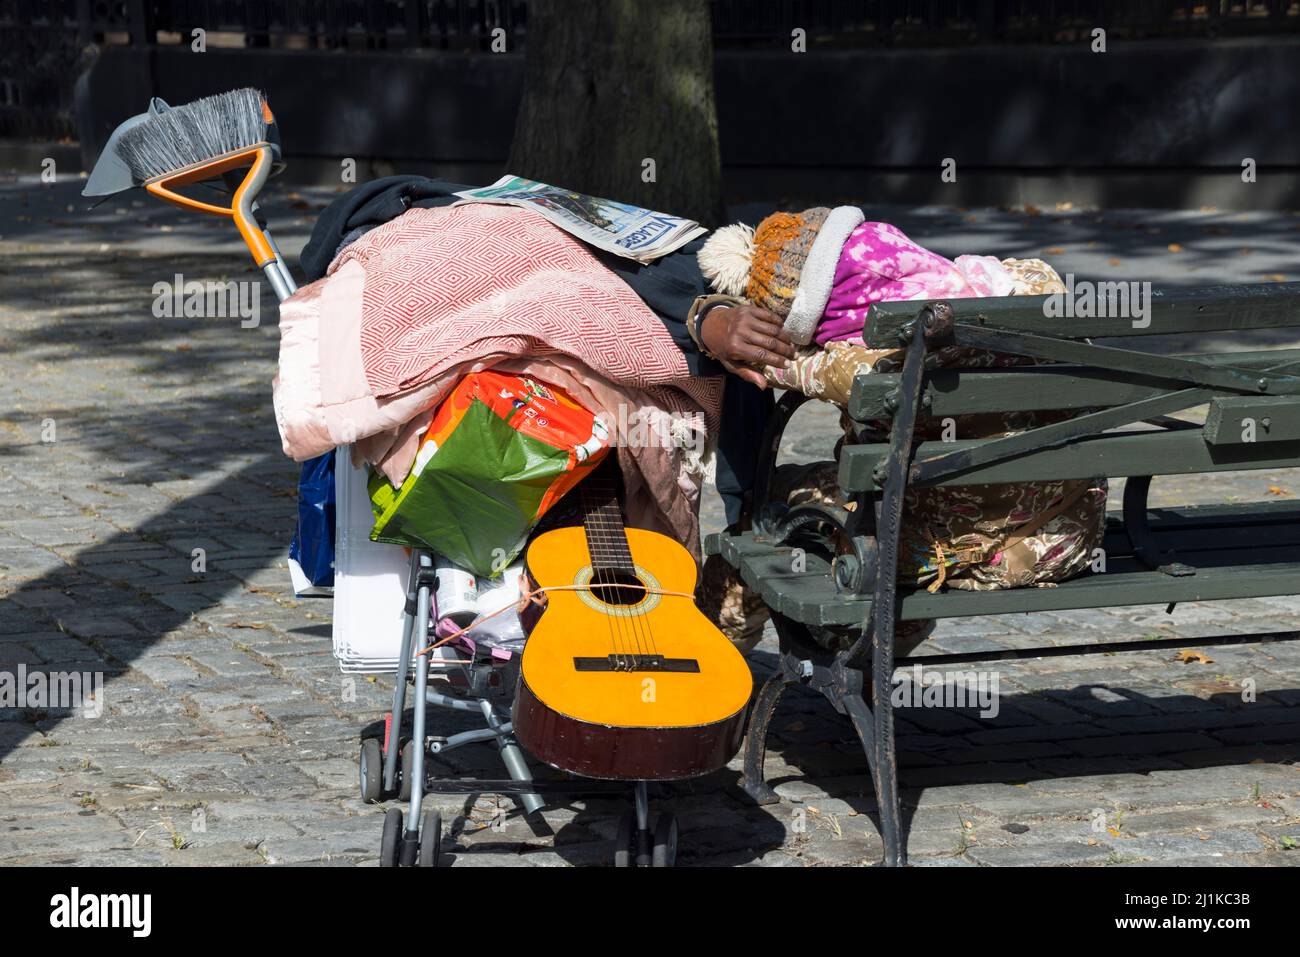 La persona senza tetto dorme accanto al banco del parco a East Village NYC. Foto Stock